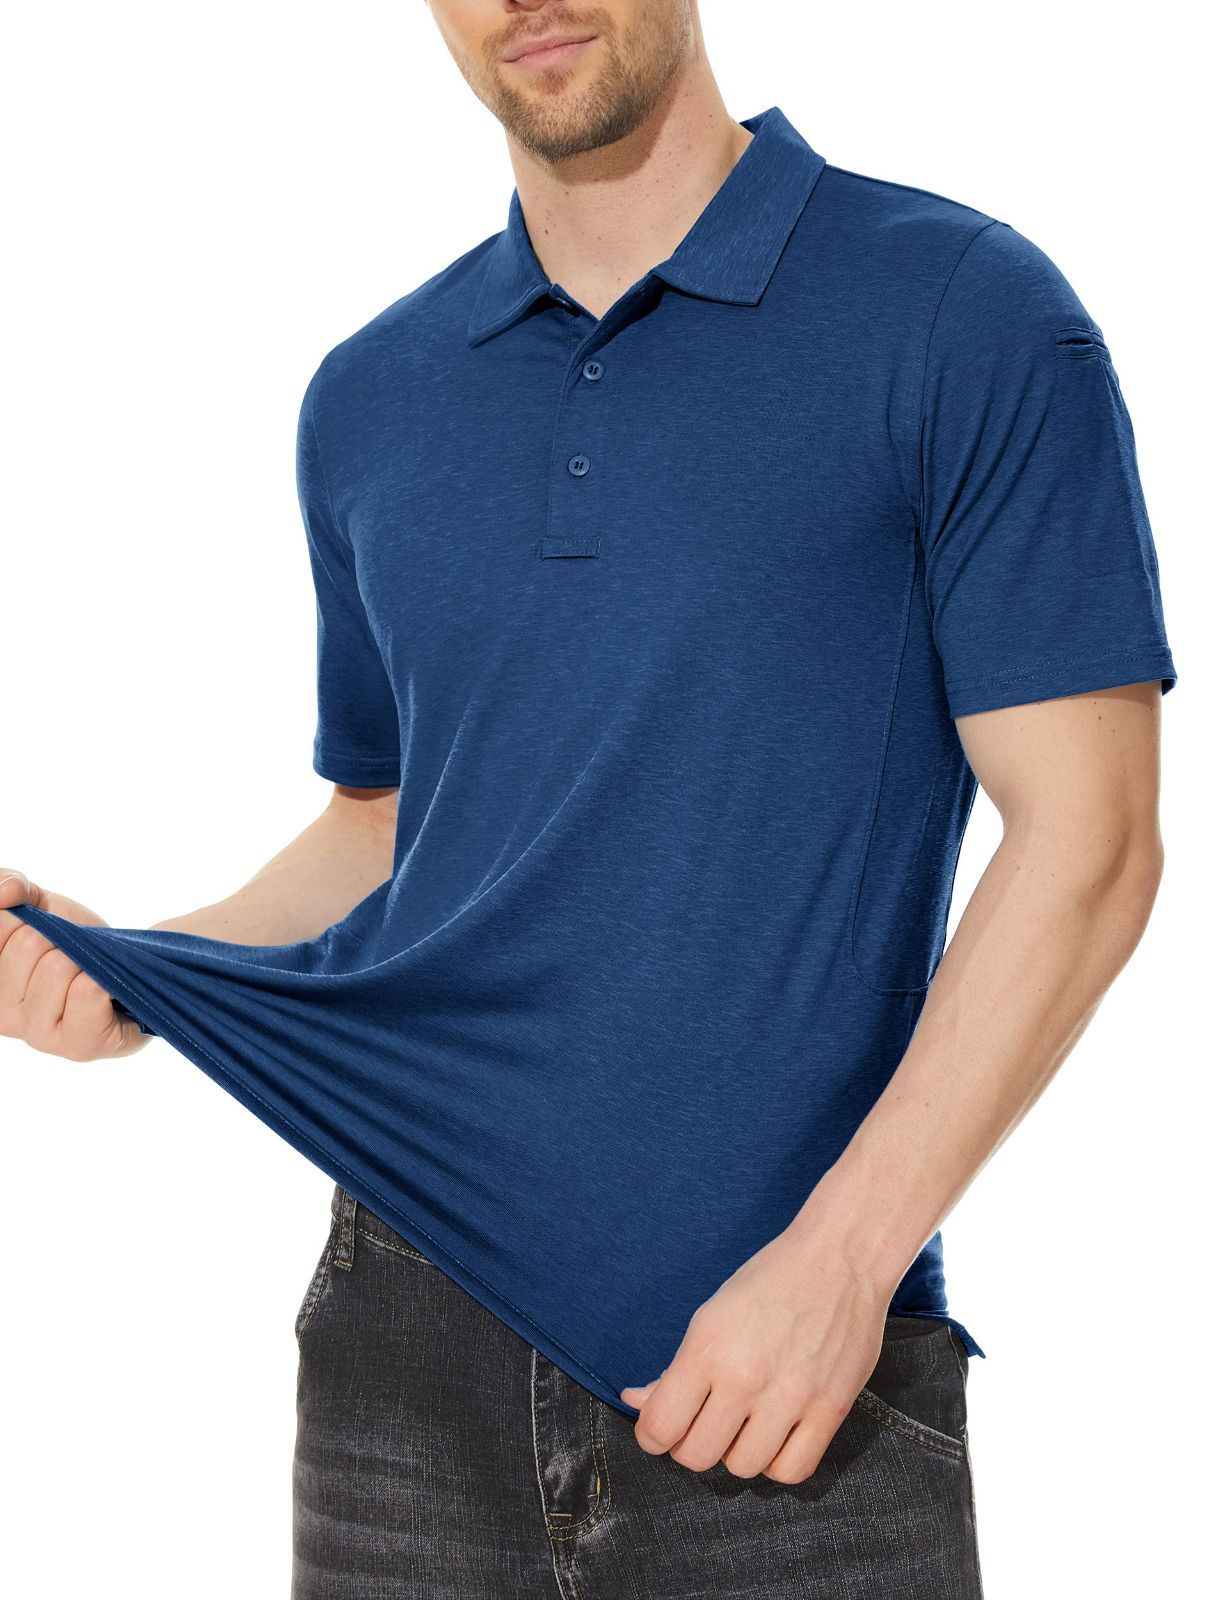 TACVASEN ポロシャツ メンズ 半袖シャツ カジュアル ランニングウェア